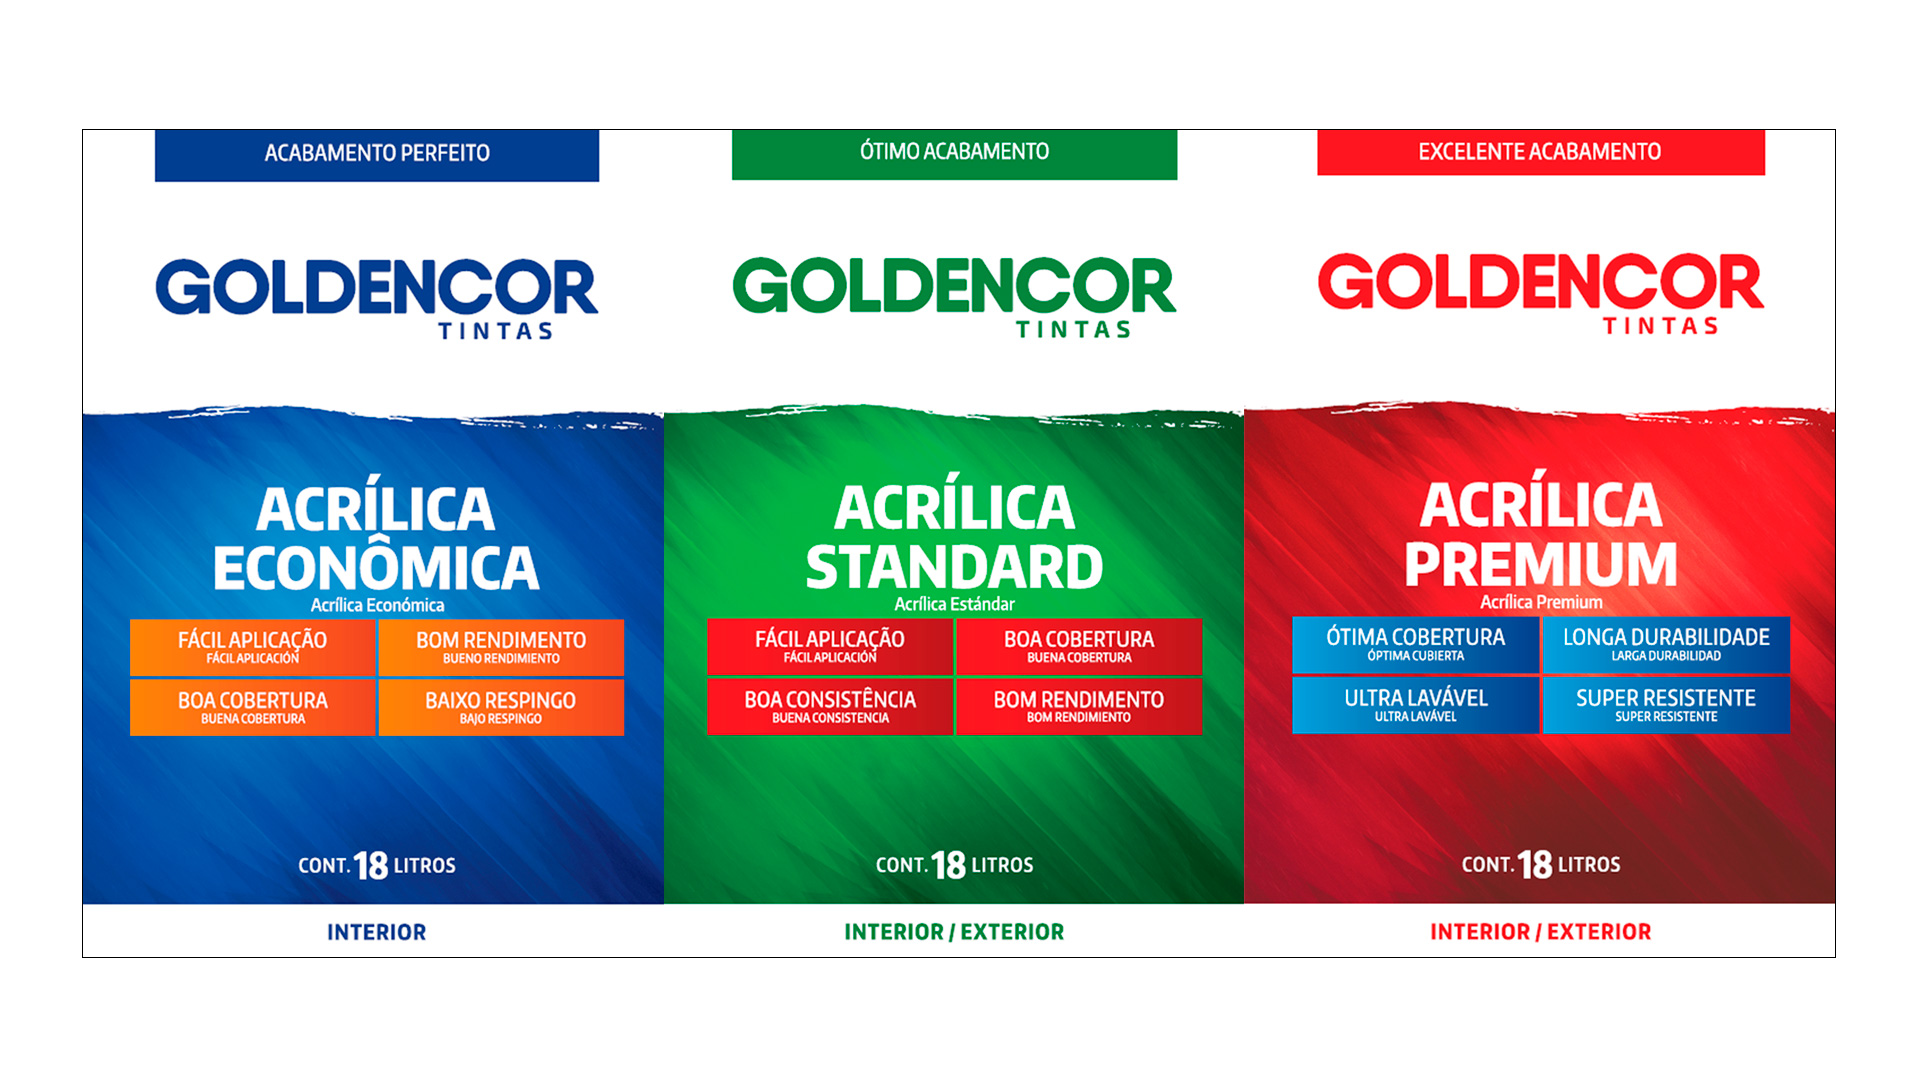 Tinta Econômica, Standard, Premium da GoldenCor Tintas